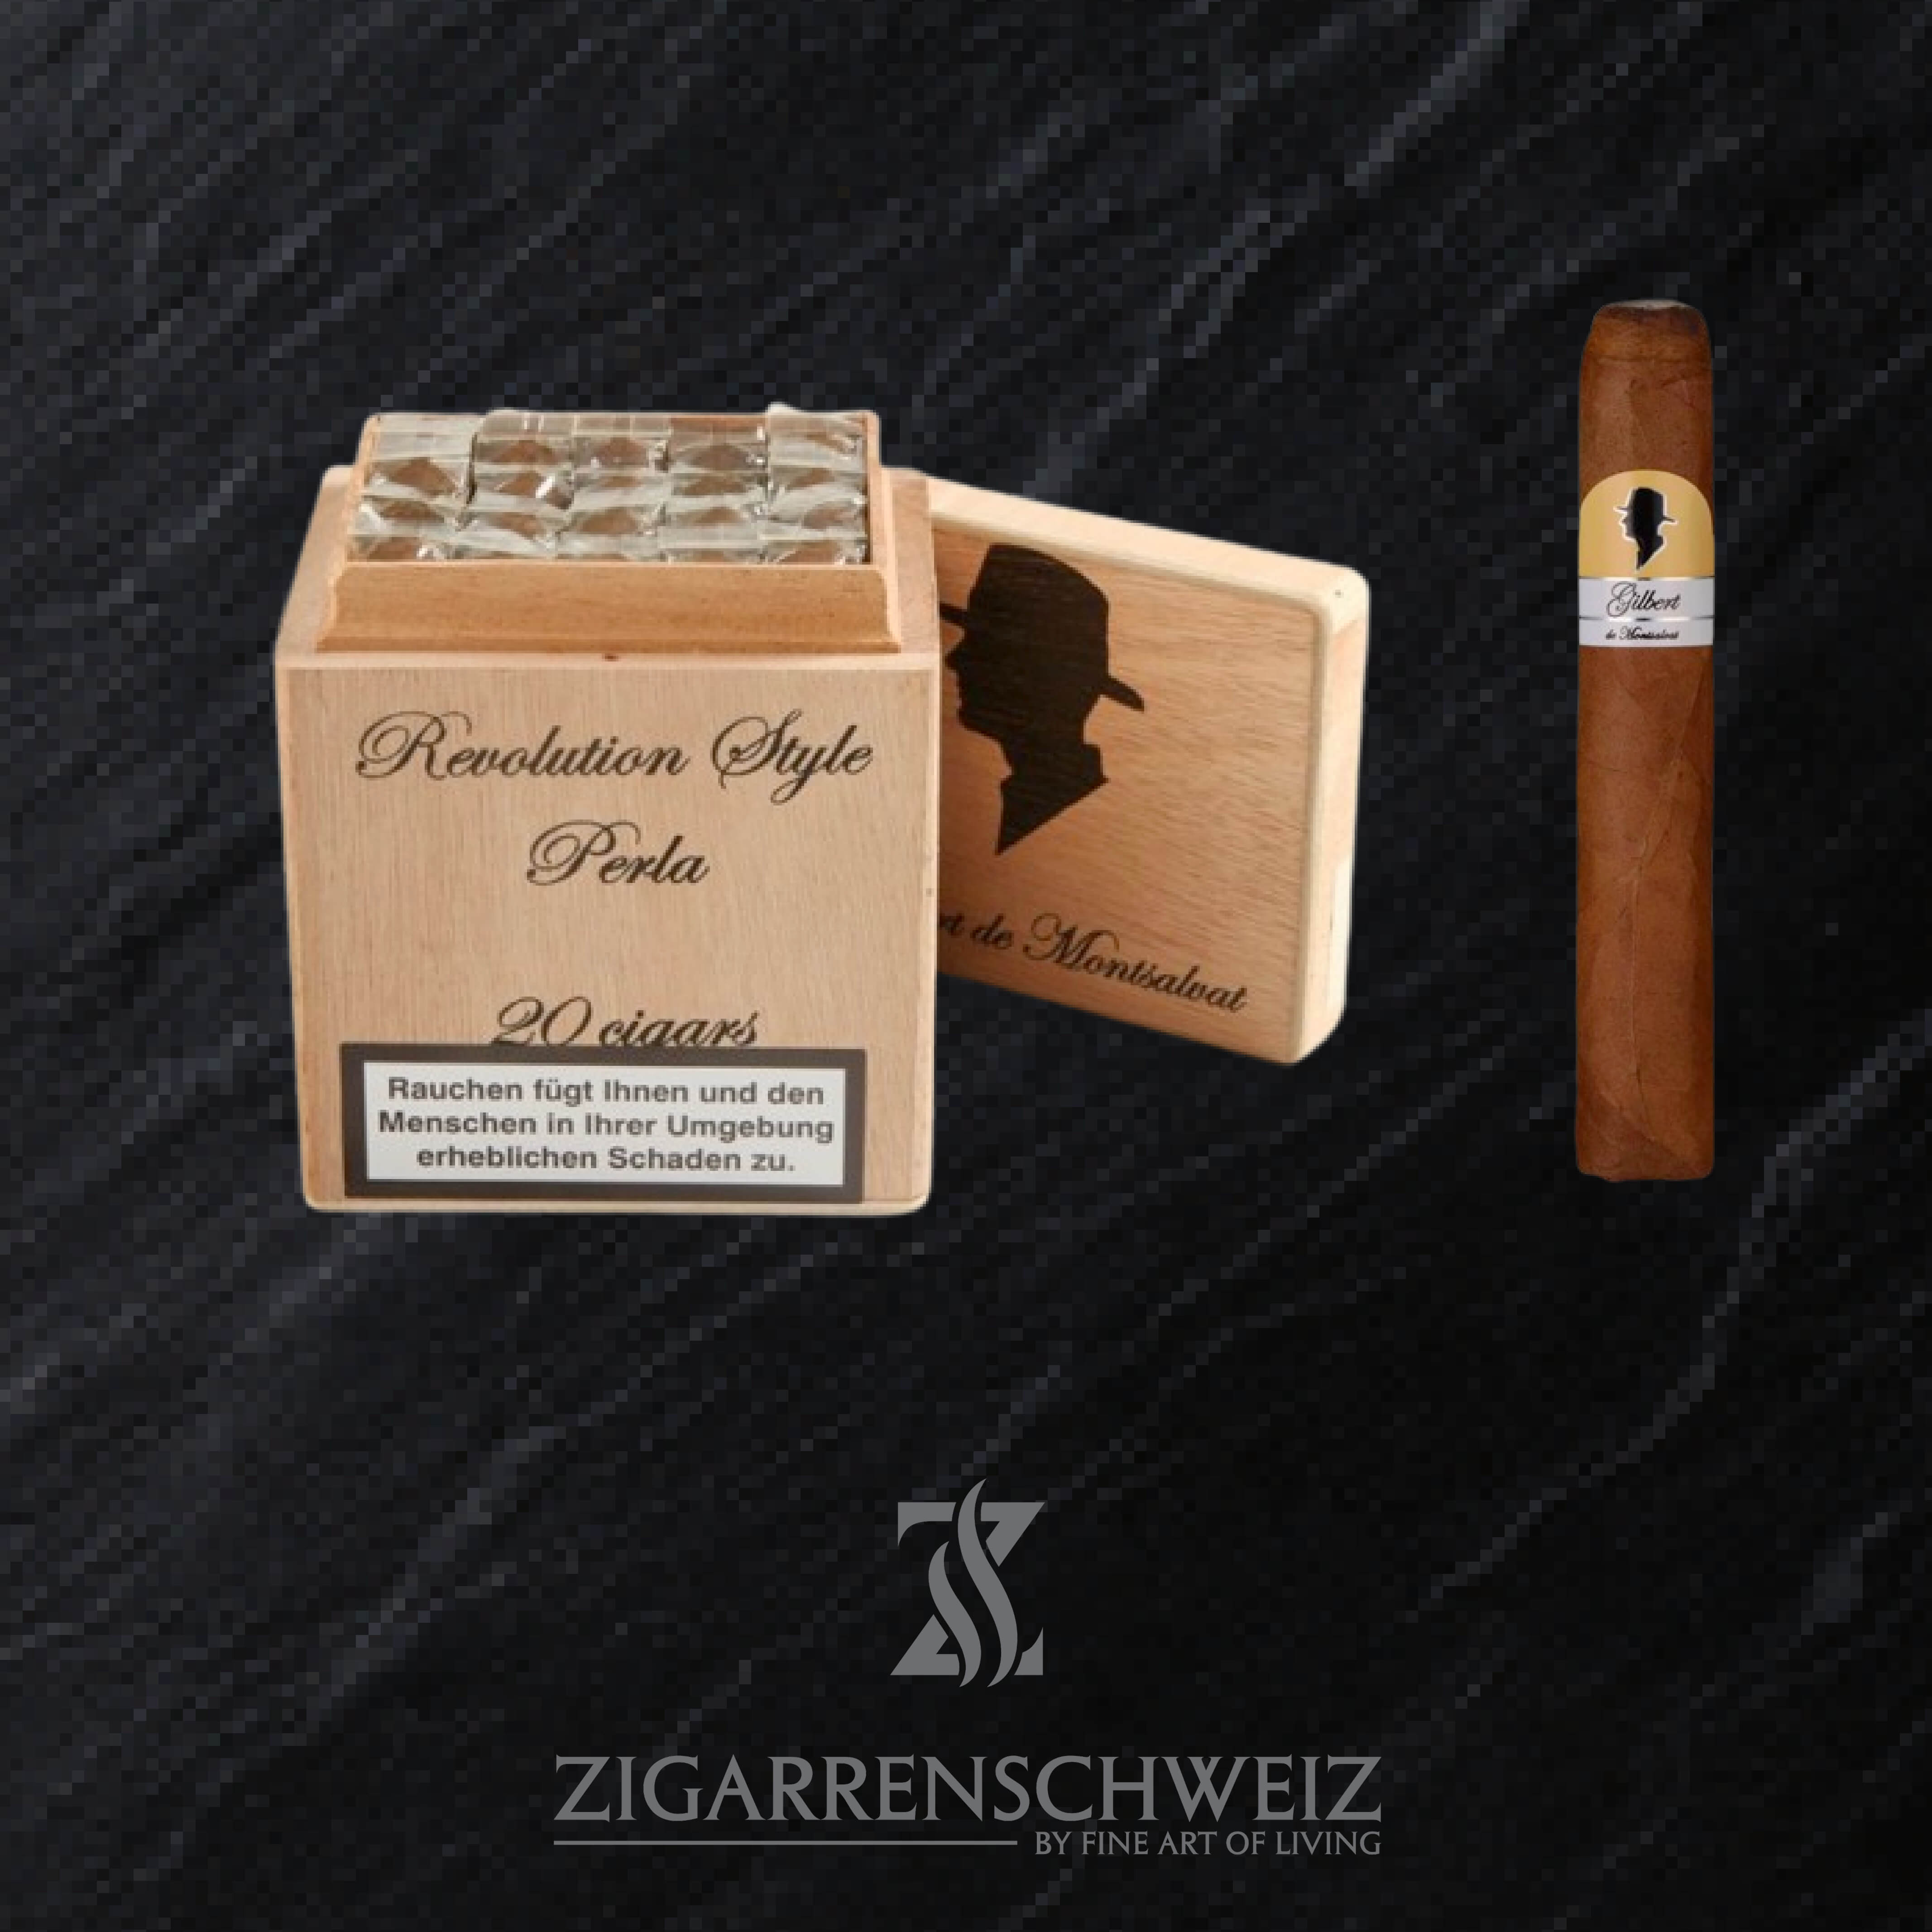 Gilbert de Montsalvat Revolution Style Perla 20er Zigarrenkiste offen